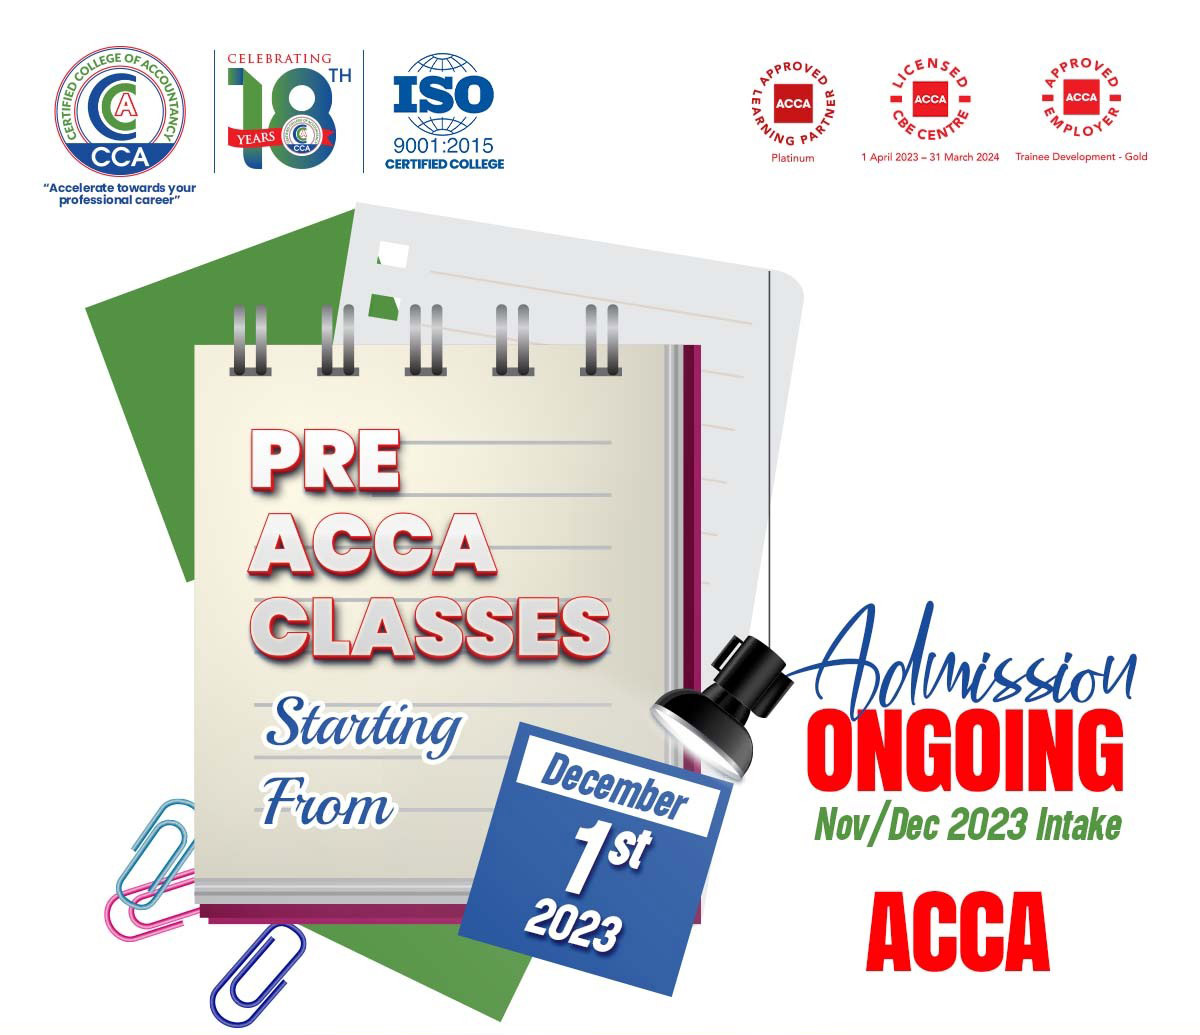 ACCA Program Admissions Open for Nov-Dec 2023 at CCA